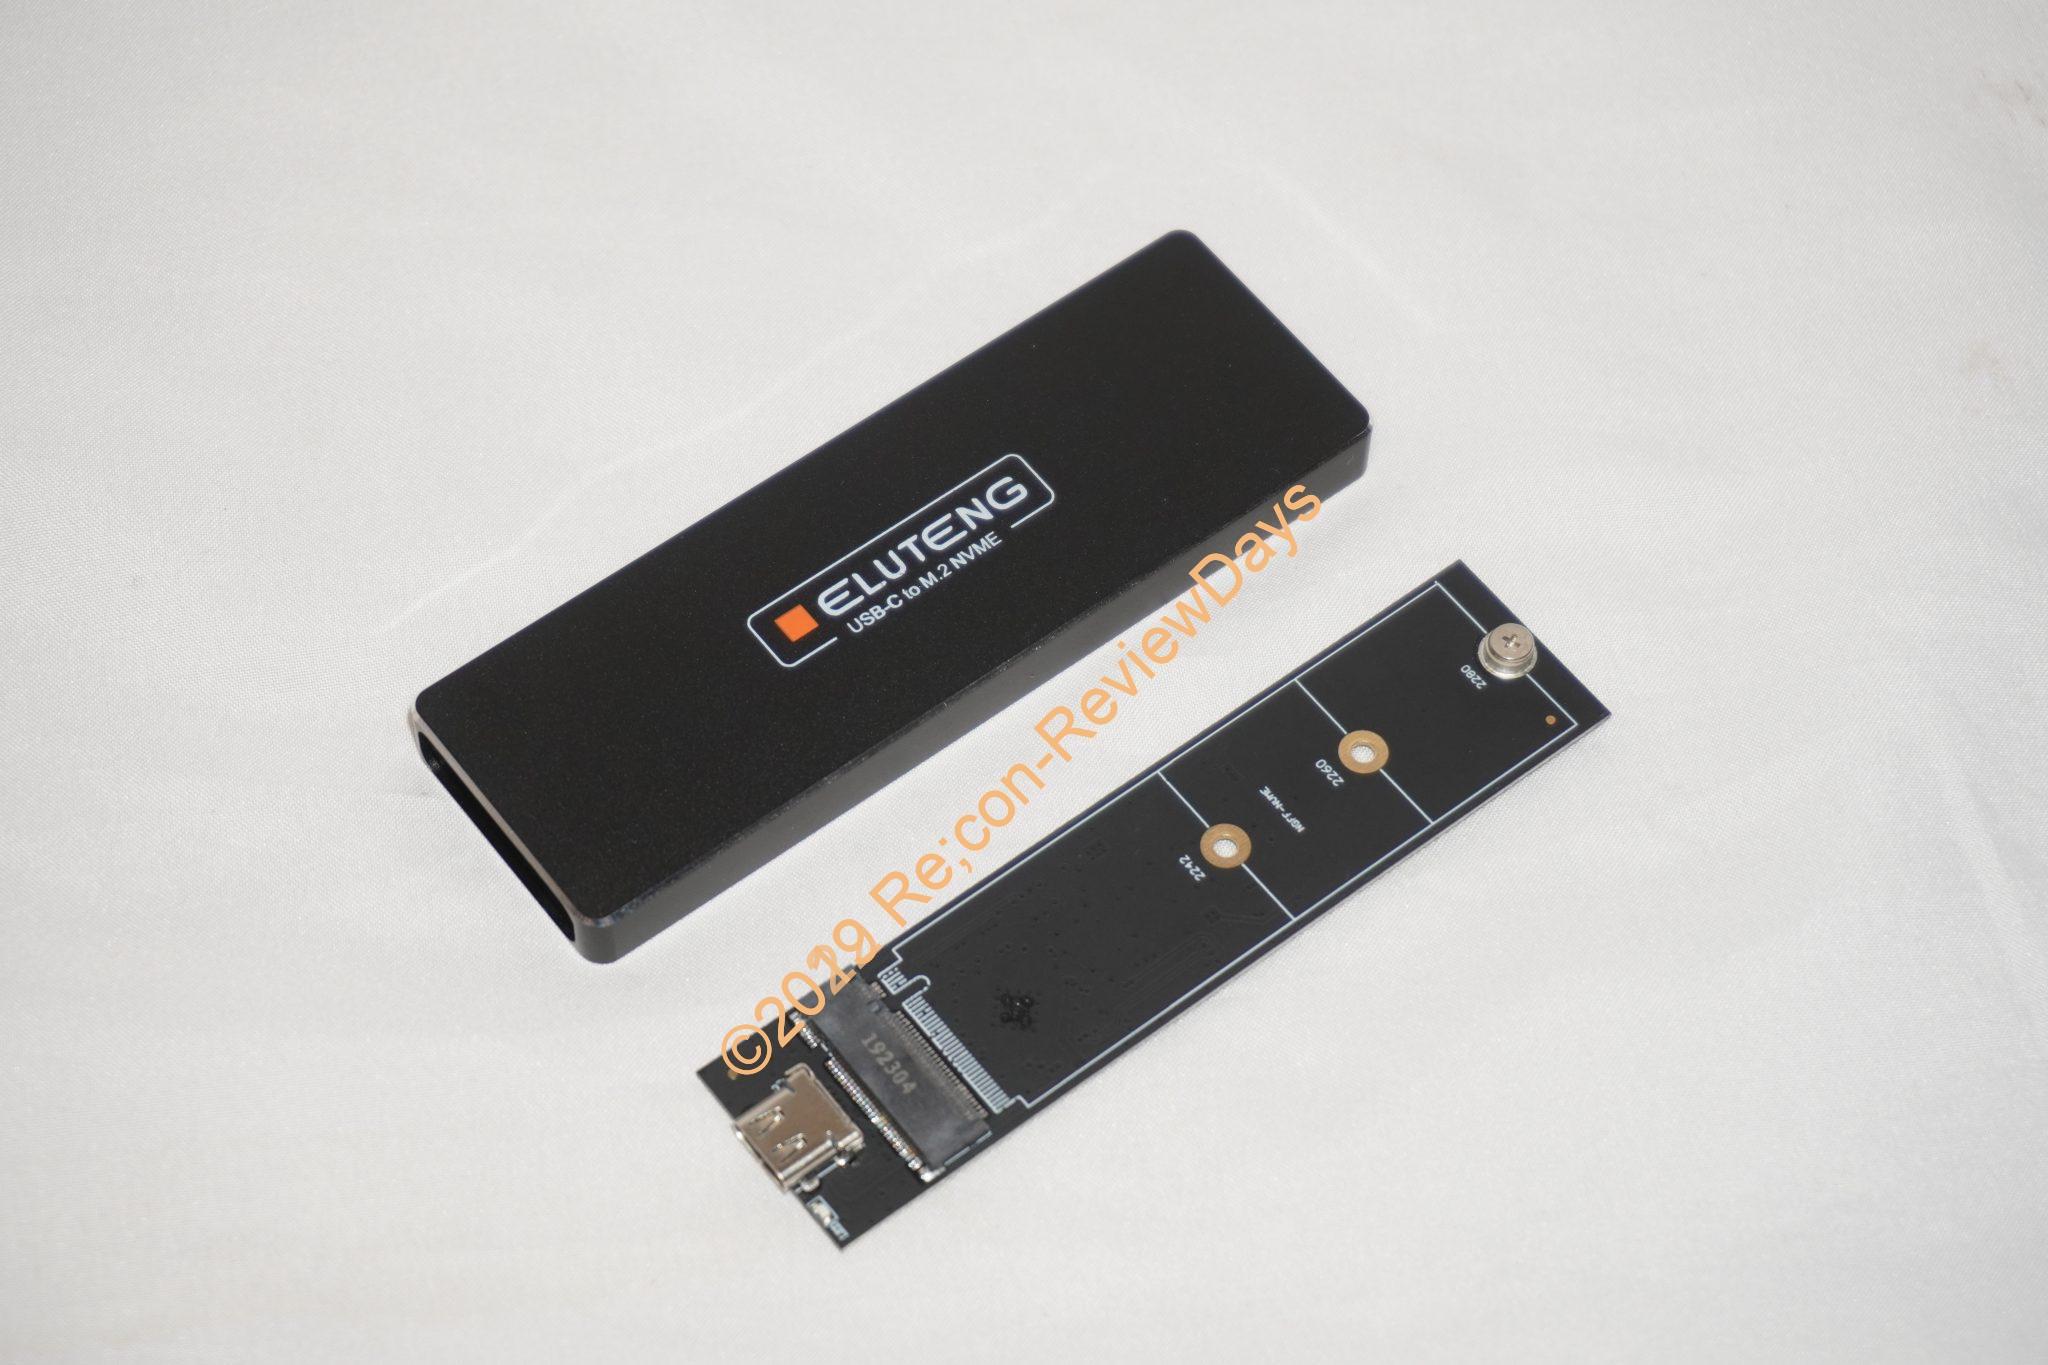 ELUTENG NVMe USB 3.2 Gen2対応外付けSSDケース「JP-ELT-NDNP-C3-BK-V3」の詳細をチェックする #ELUTENG #NVMe #M2 #SSD #自作PC #ELUTENG